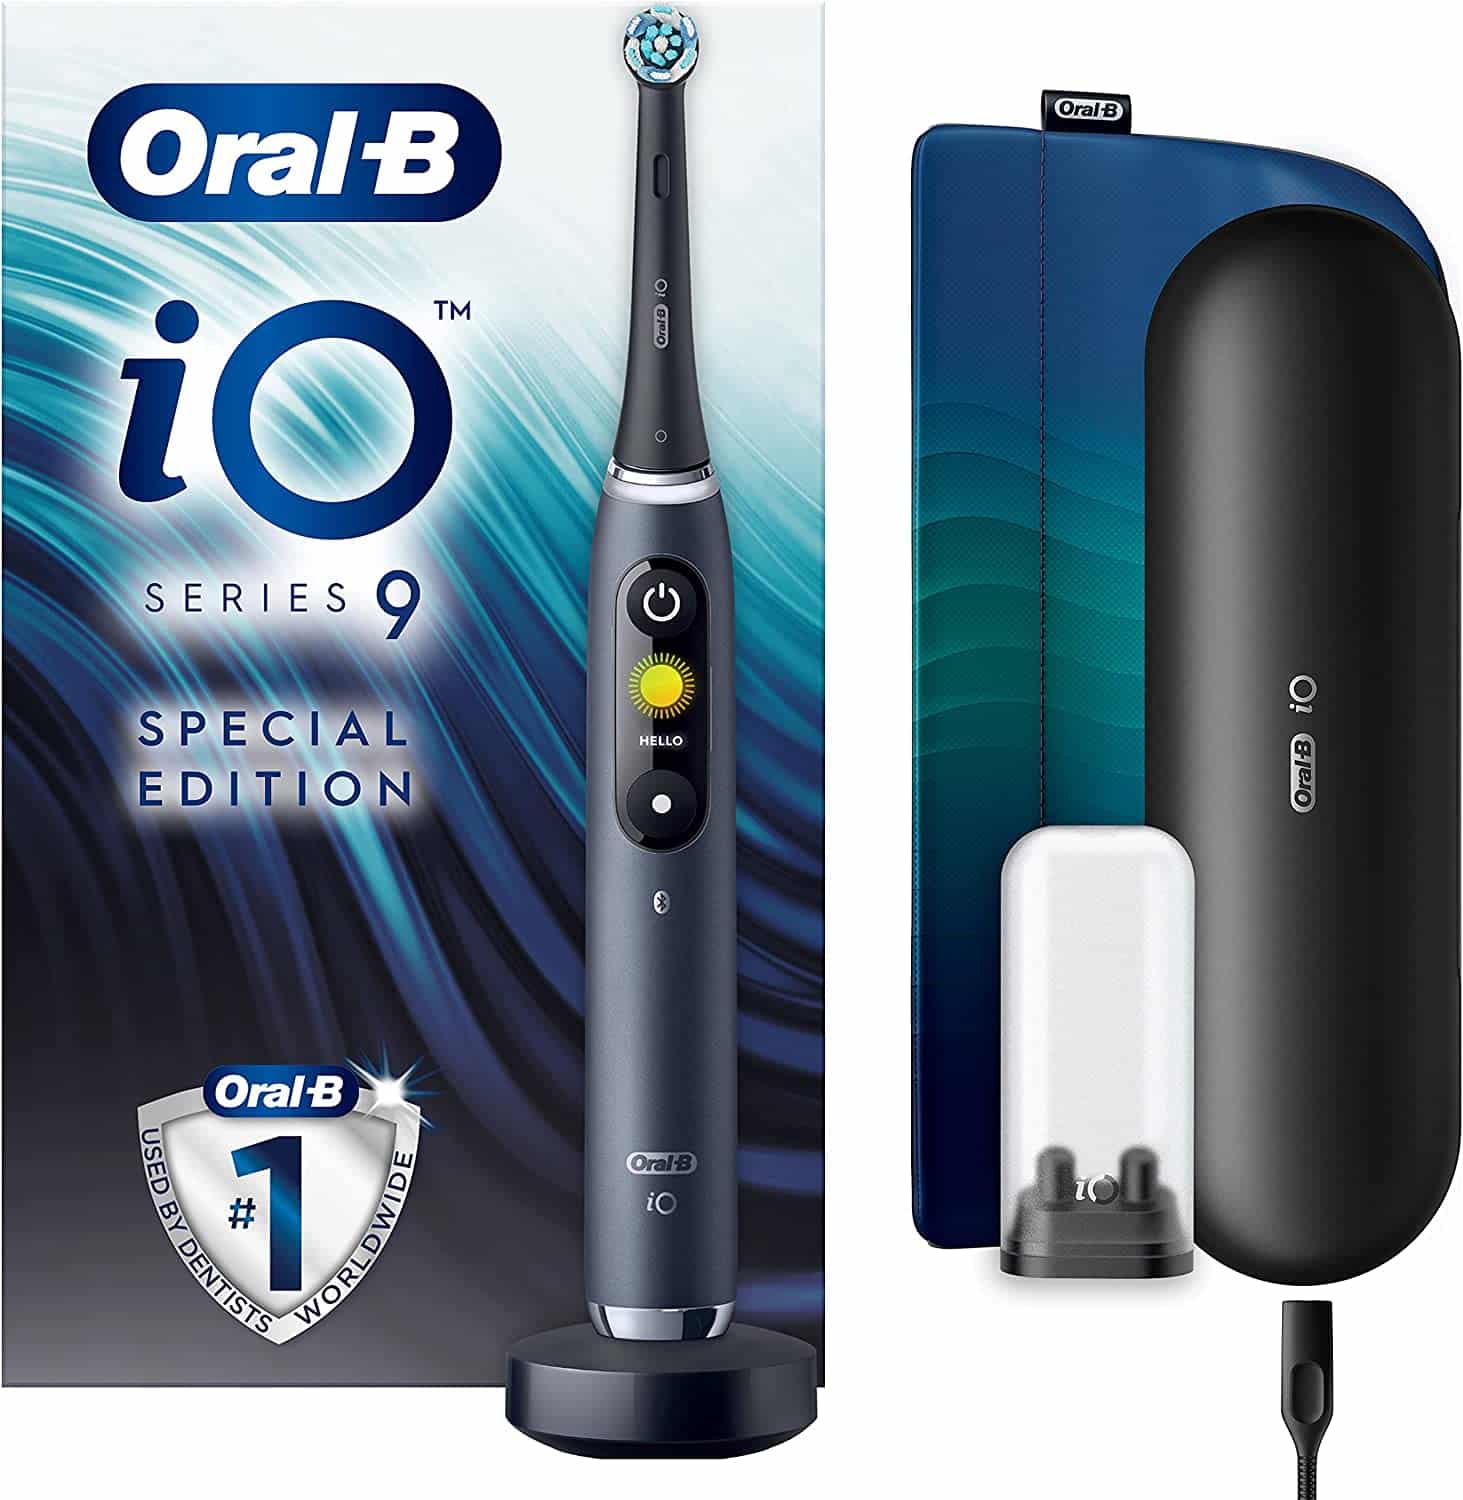 Oral-B iO Series 9 Toothbrush